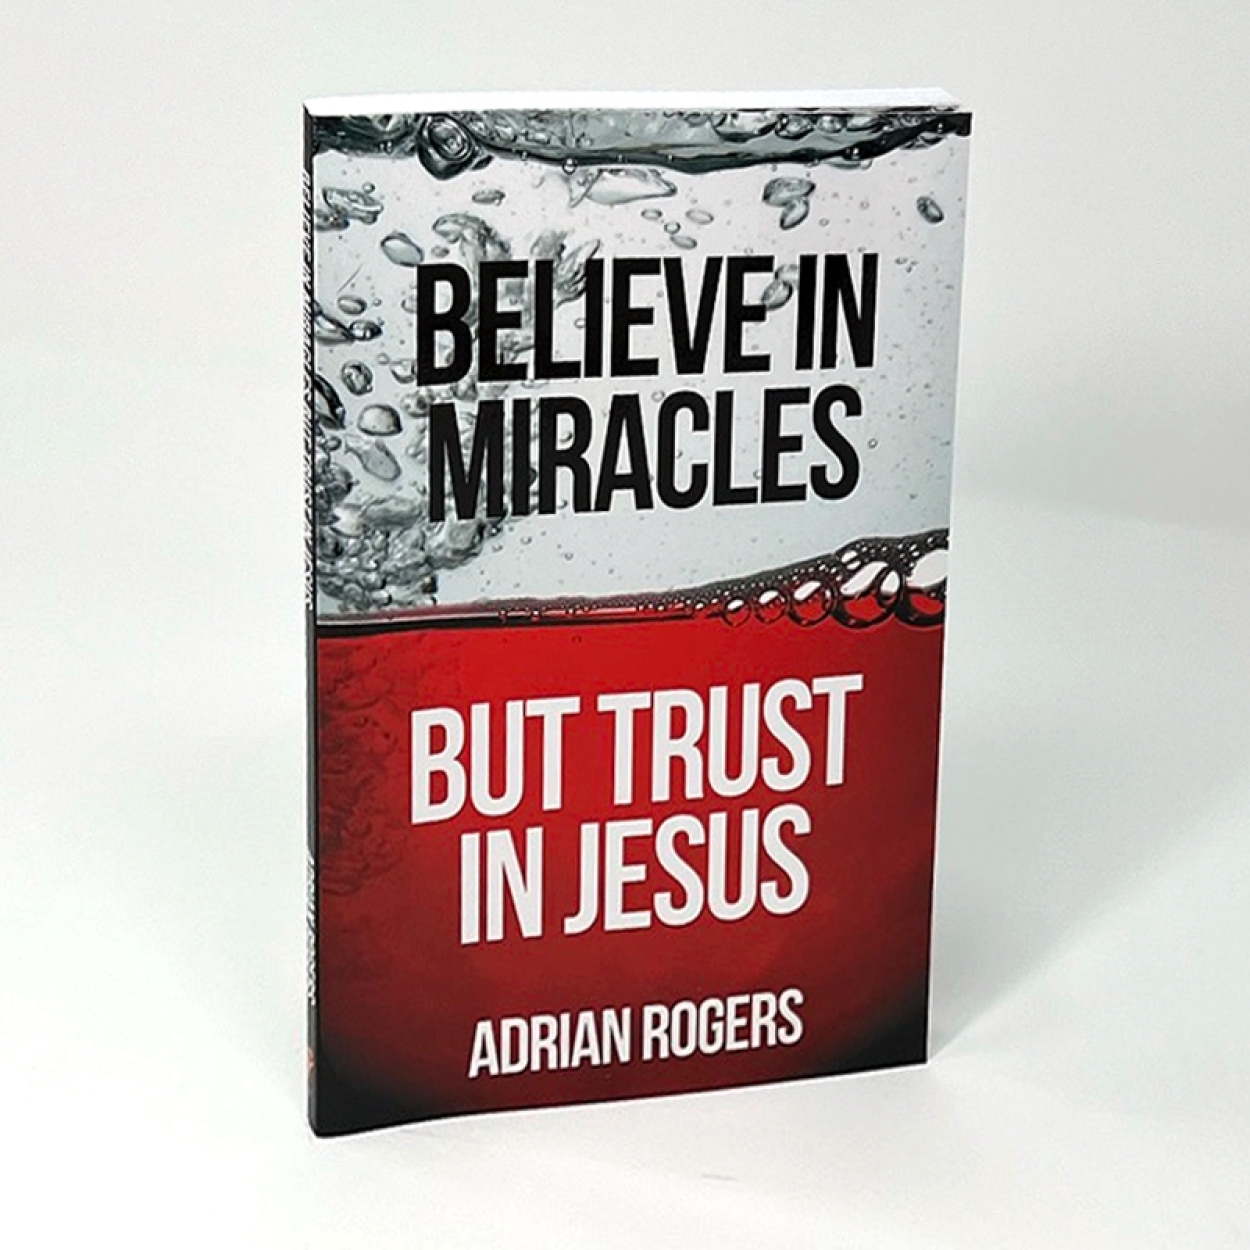 Believe in miracles but trust in jesus book sq b105